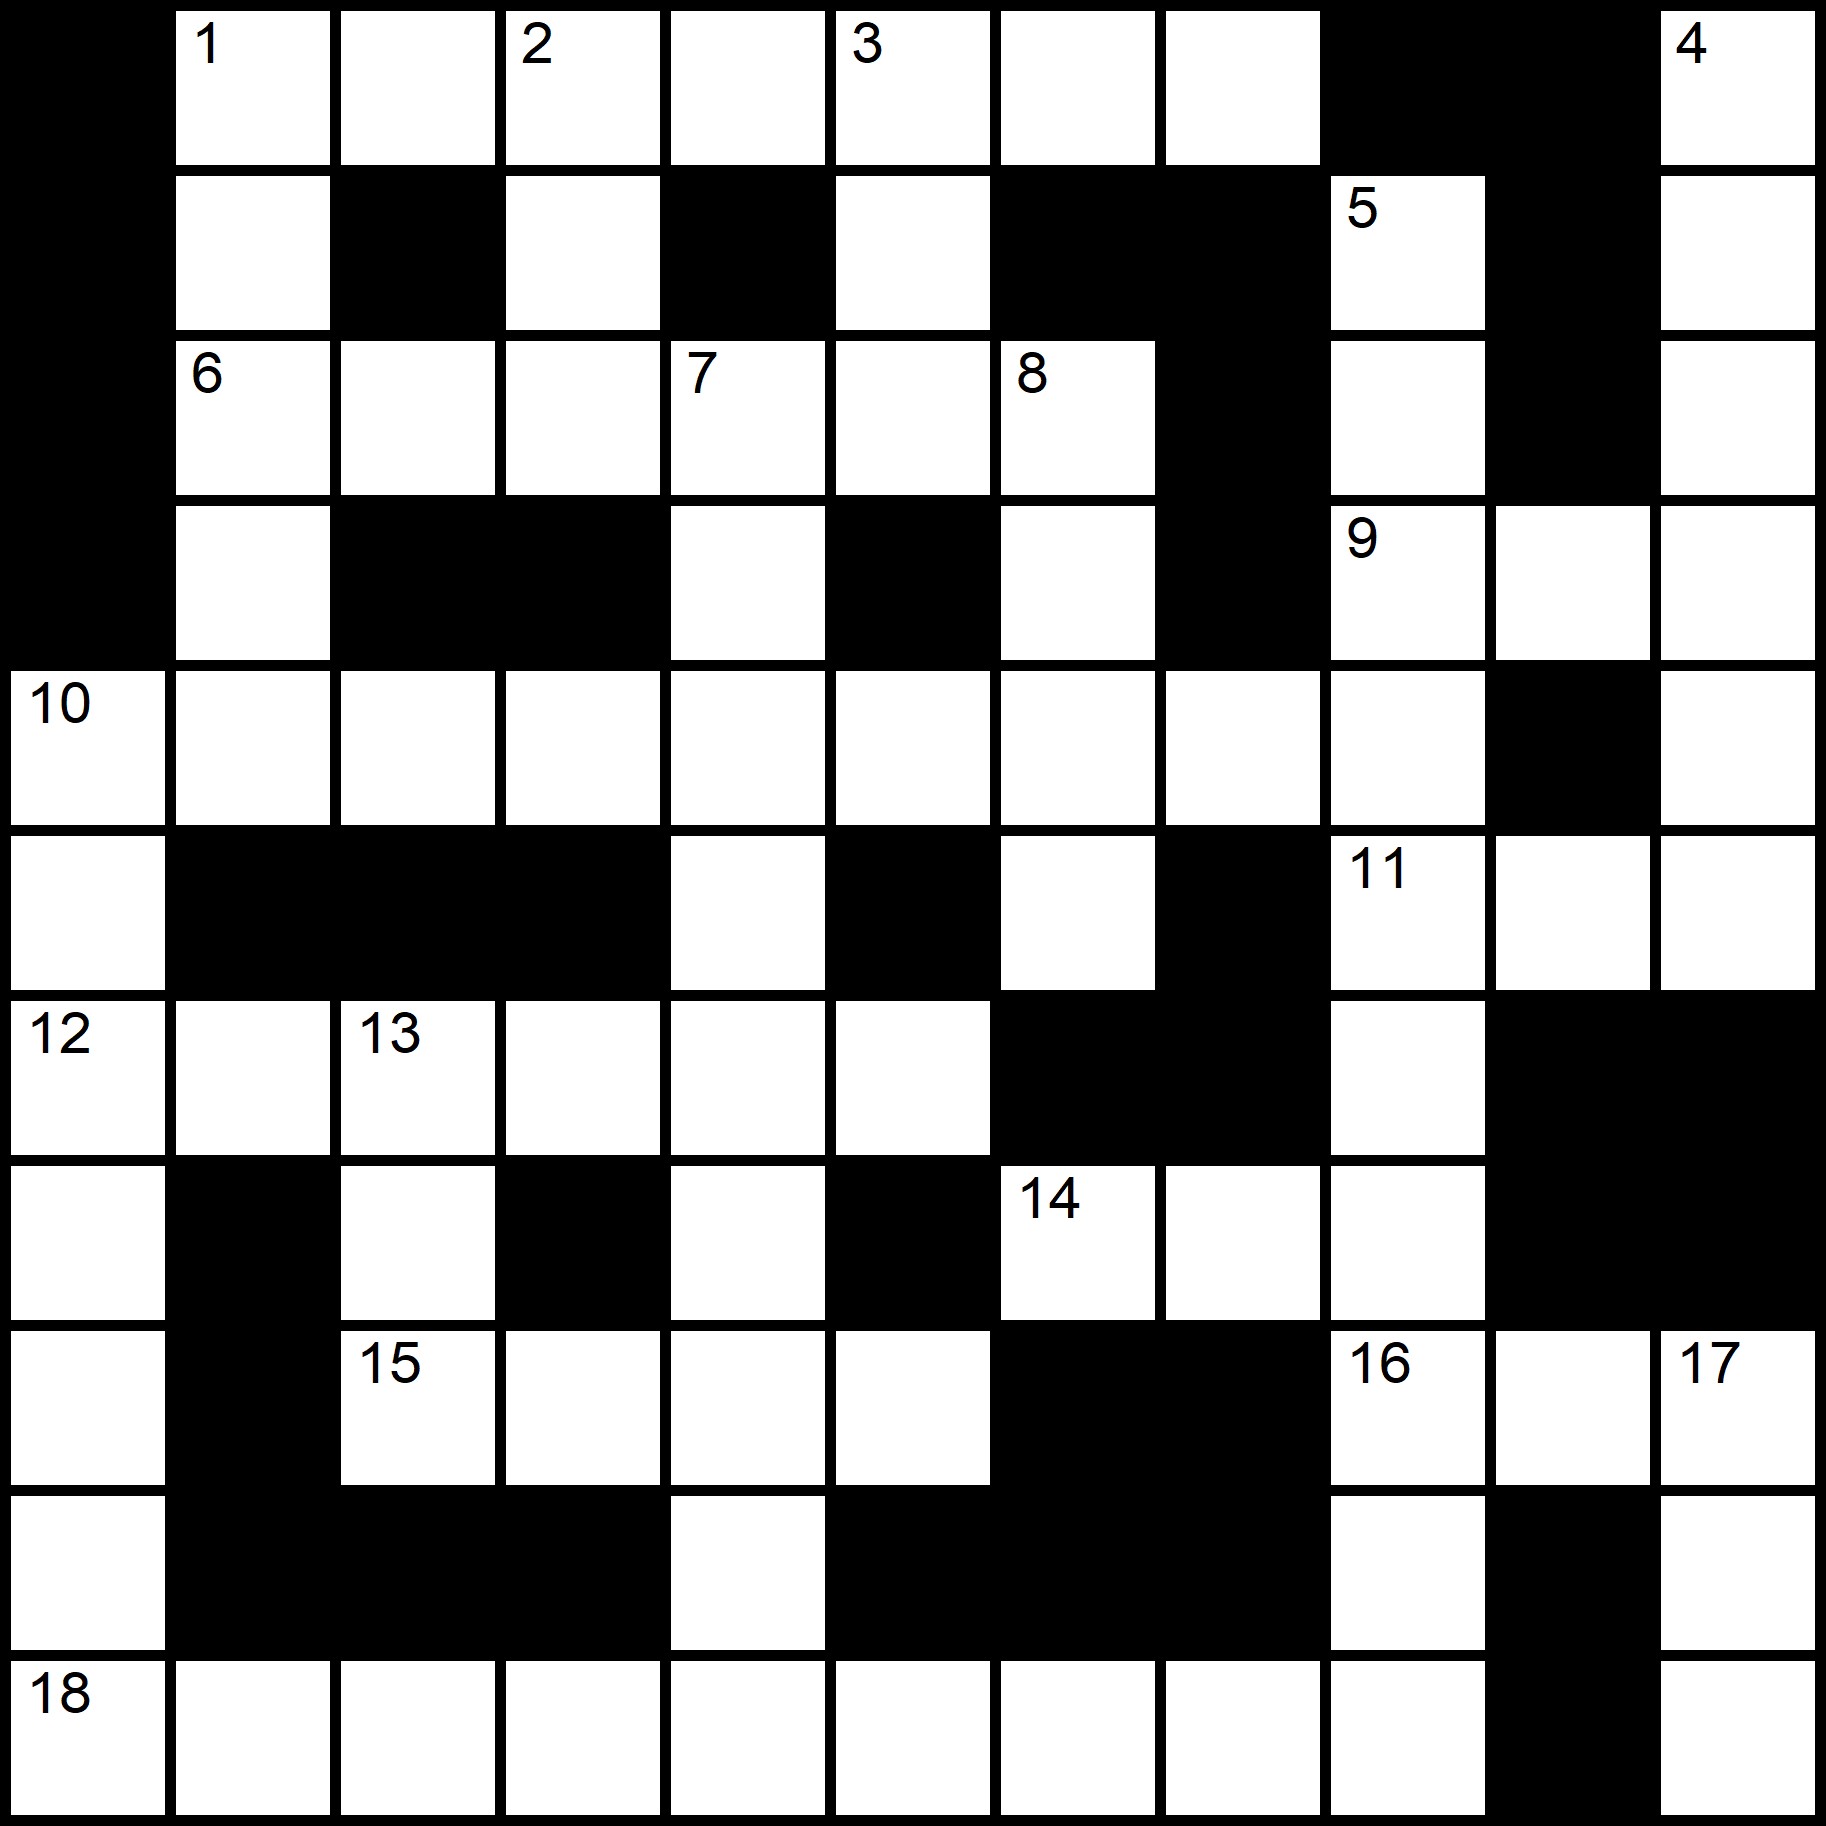 Printable Easy Crosswords -
Placidus Flora - Crossword number twenty-one